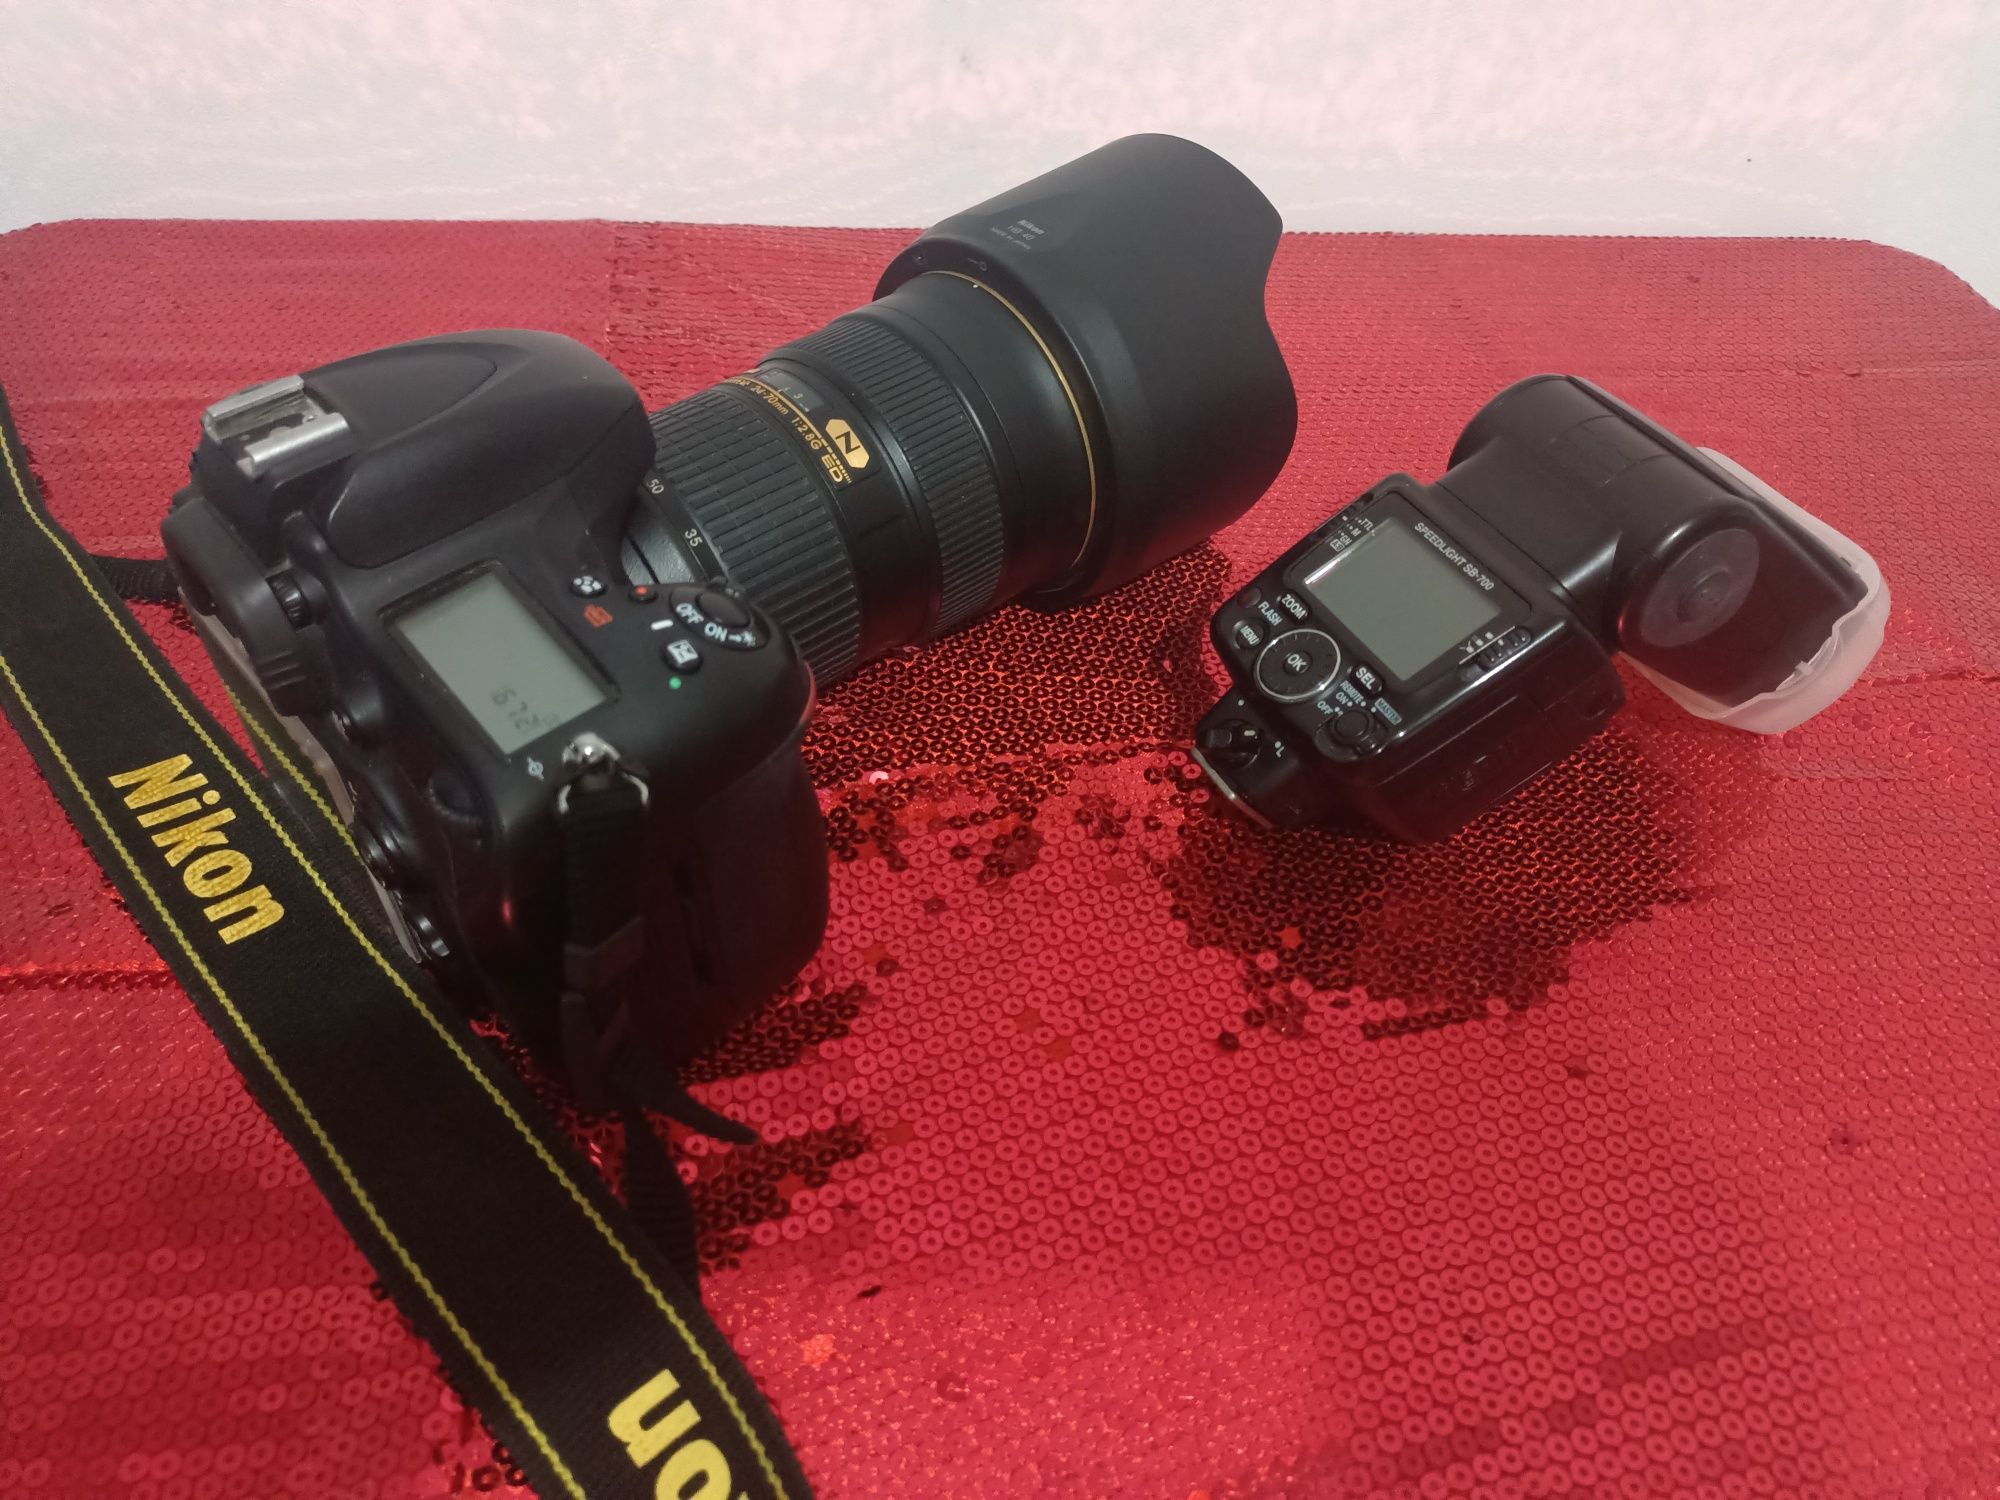 Kit aparat foto Nikon 610 cu obiectiv 24-70 Condiții excelente